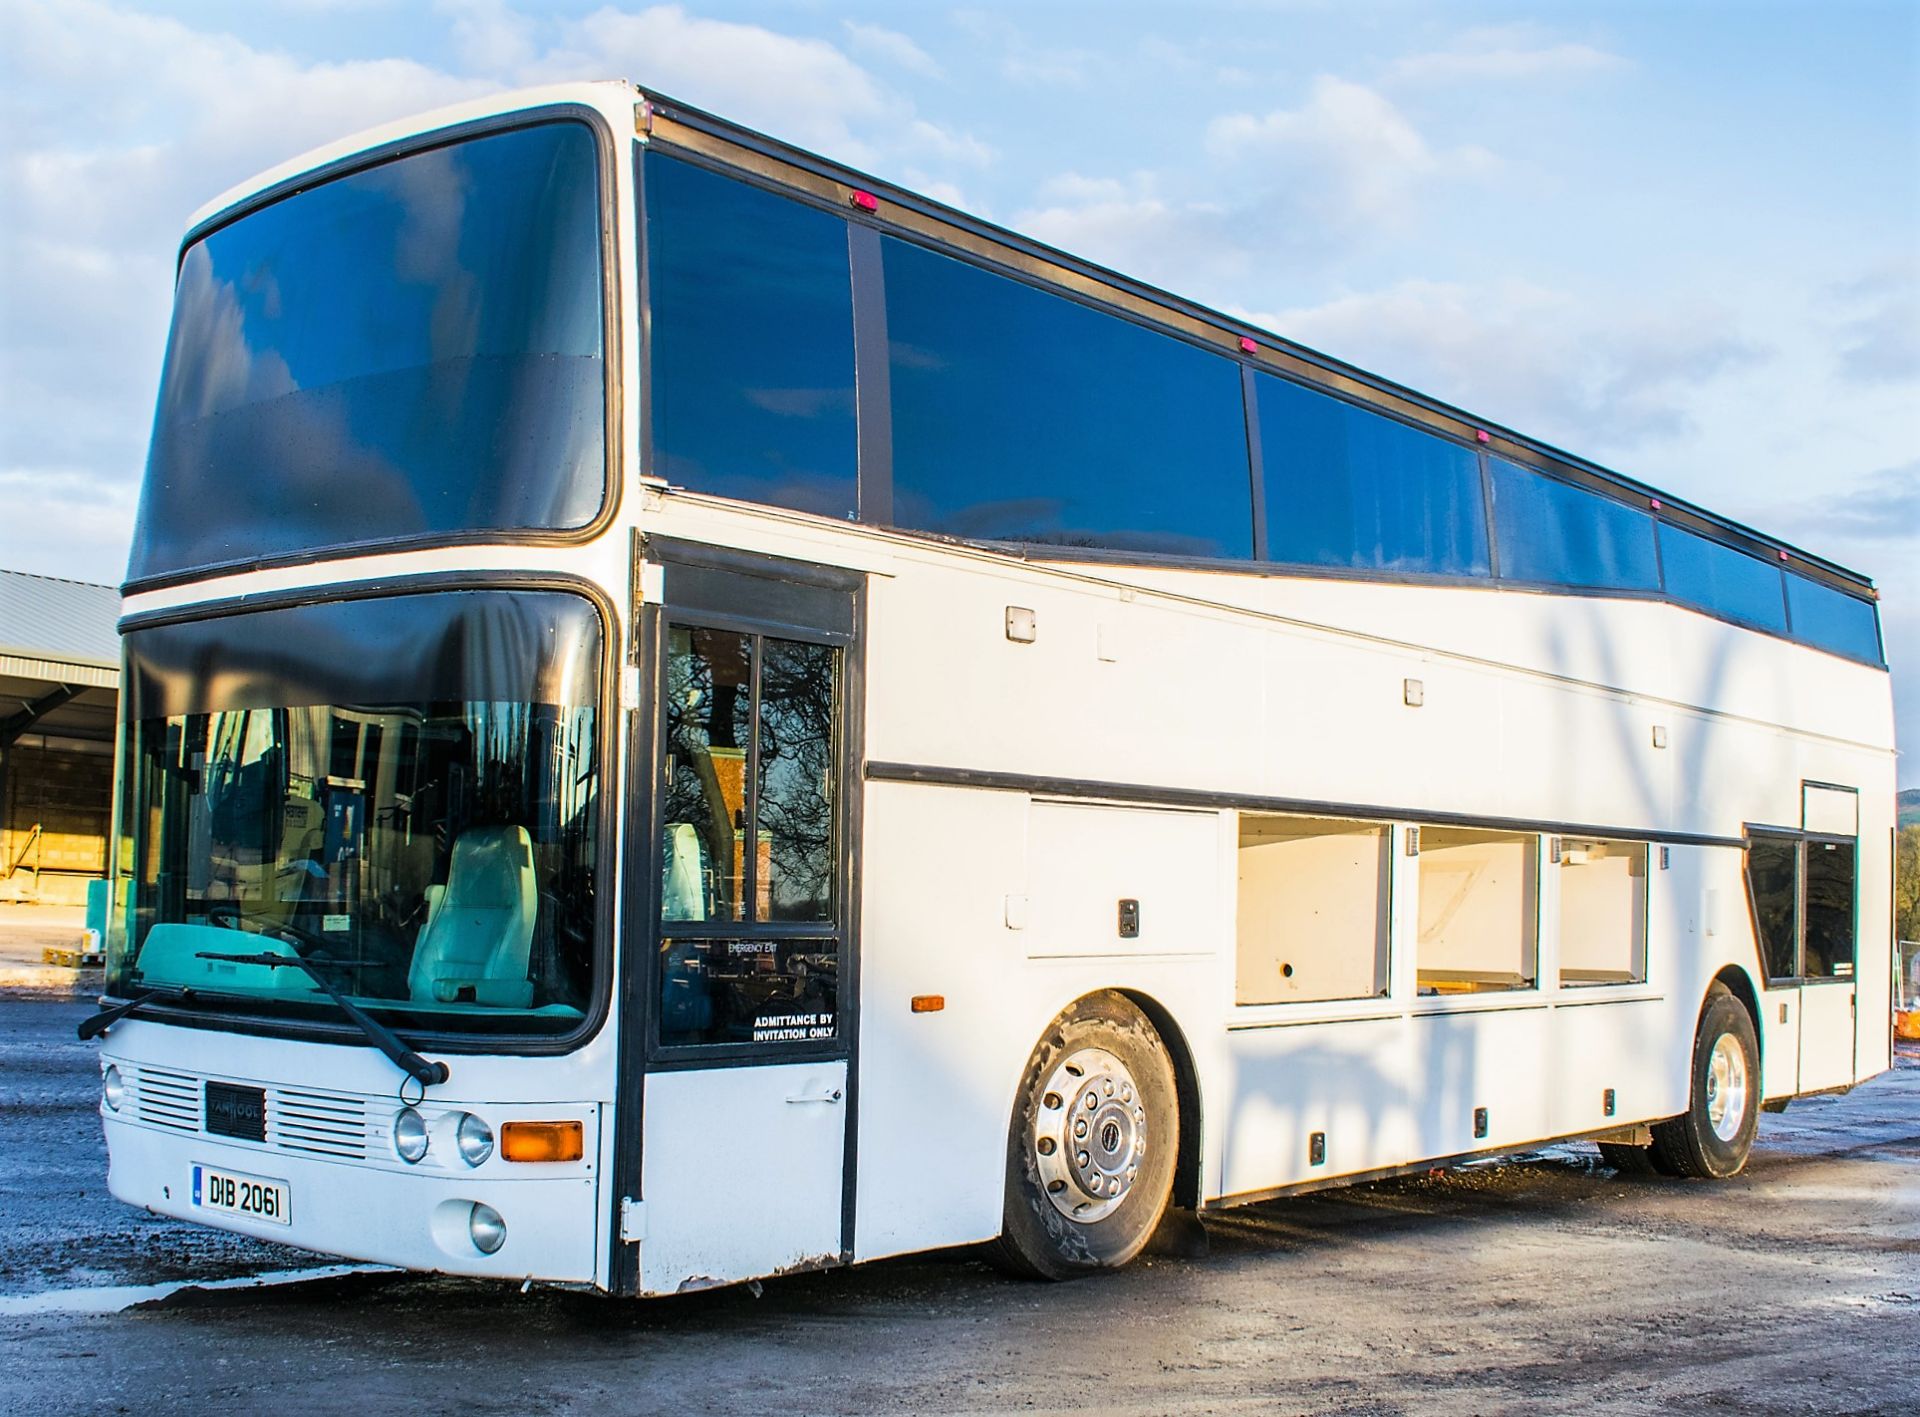 Vanhool double decker luxury tour coach Registration Number: DIB 2061 Date of Registration: 10/06/